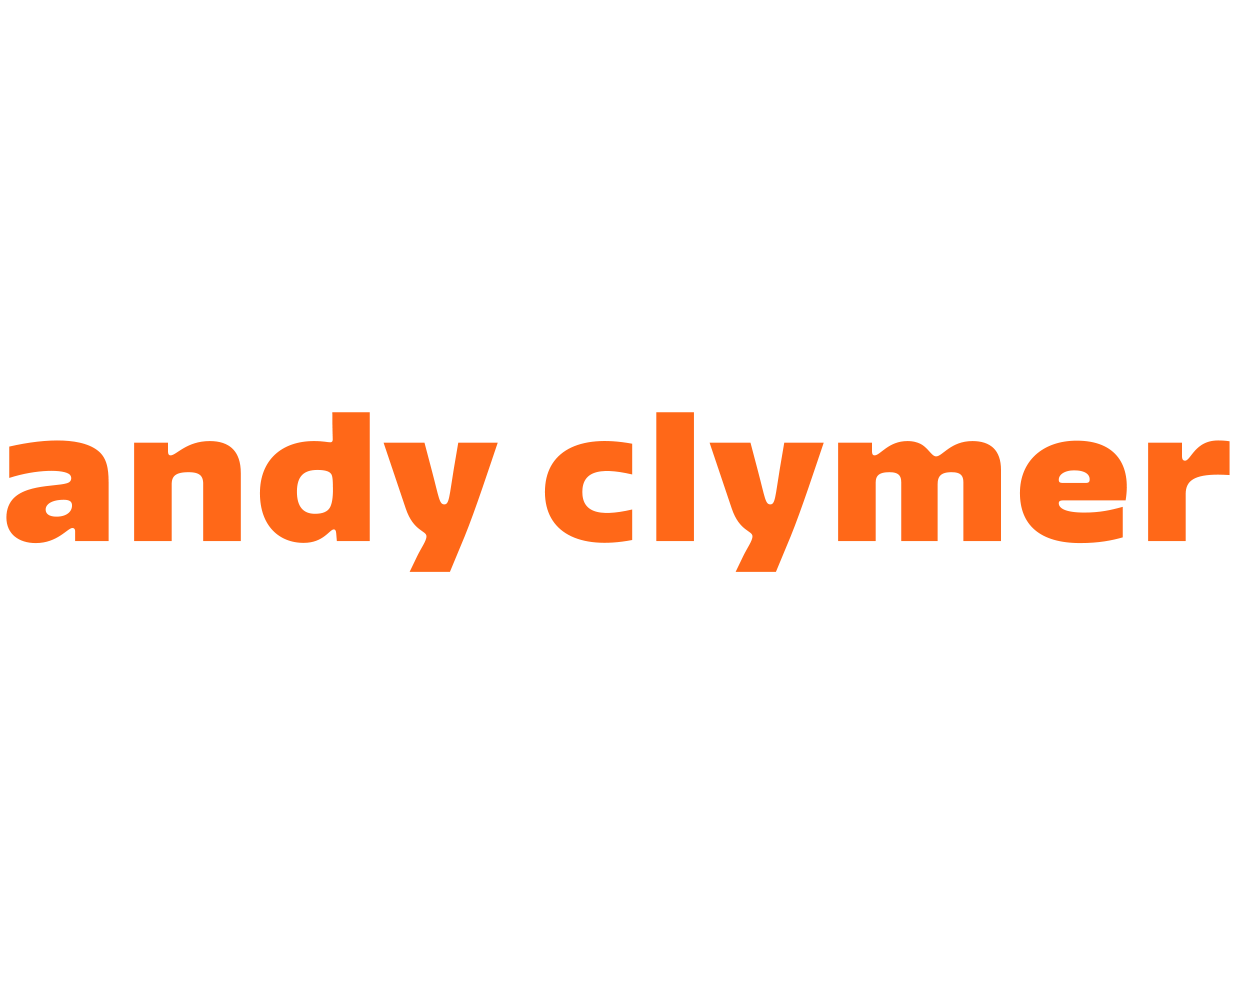 Andy Clymer